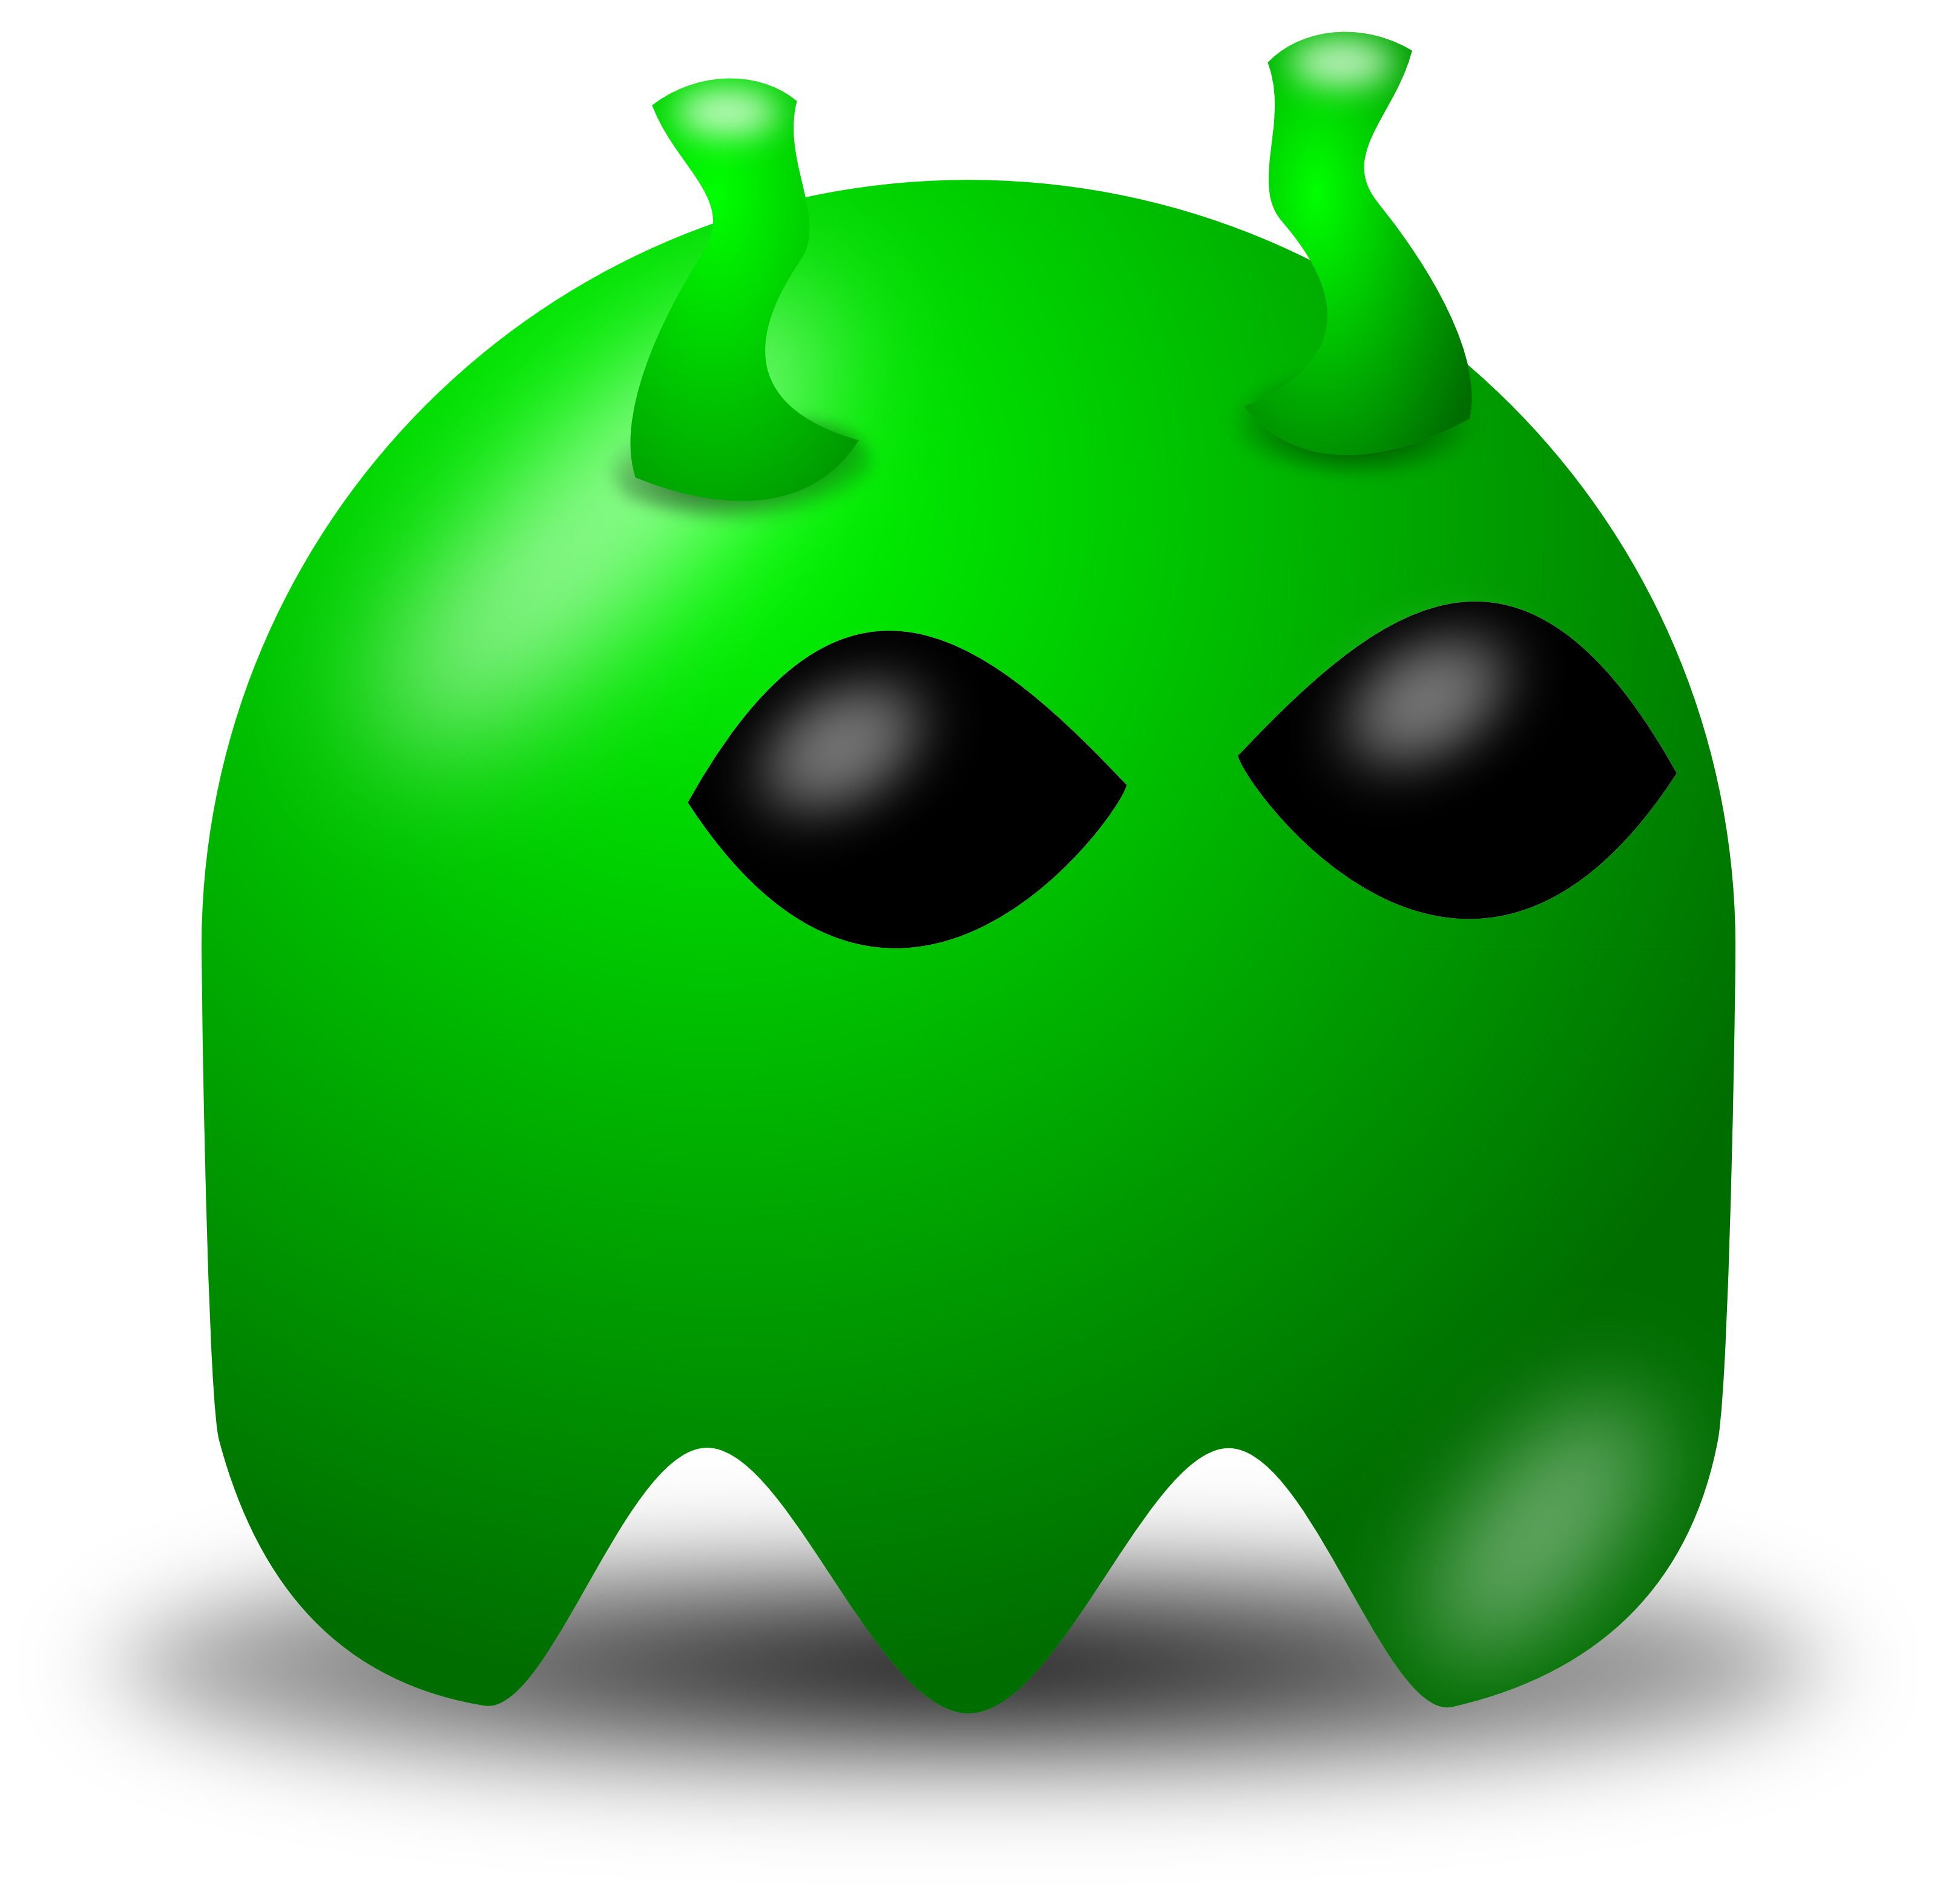 Free Vector Clipart Illustration Of Green Alien Avatar Character